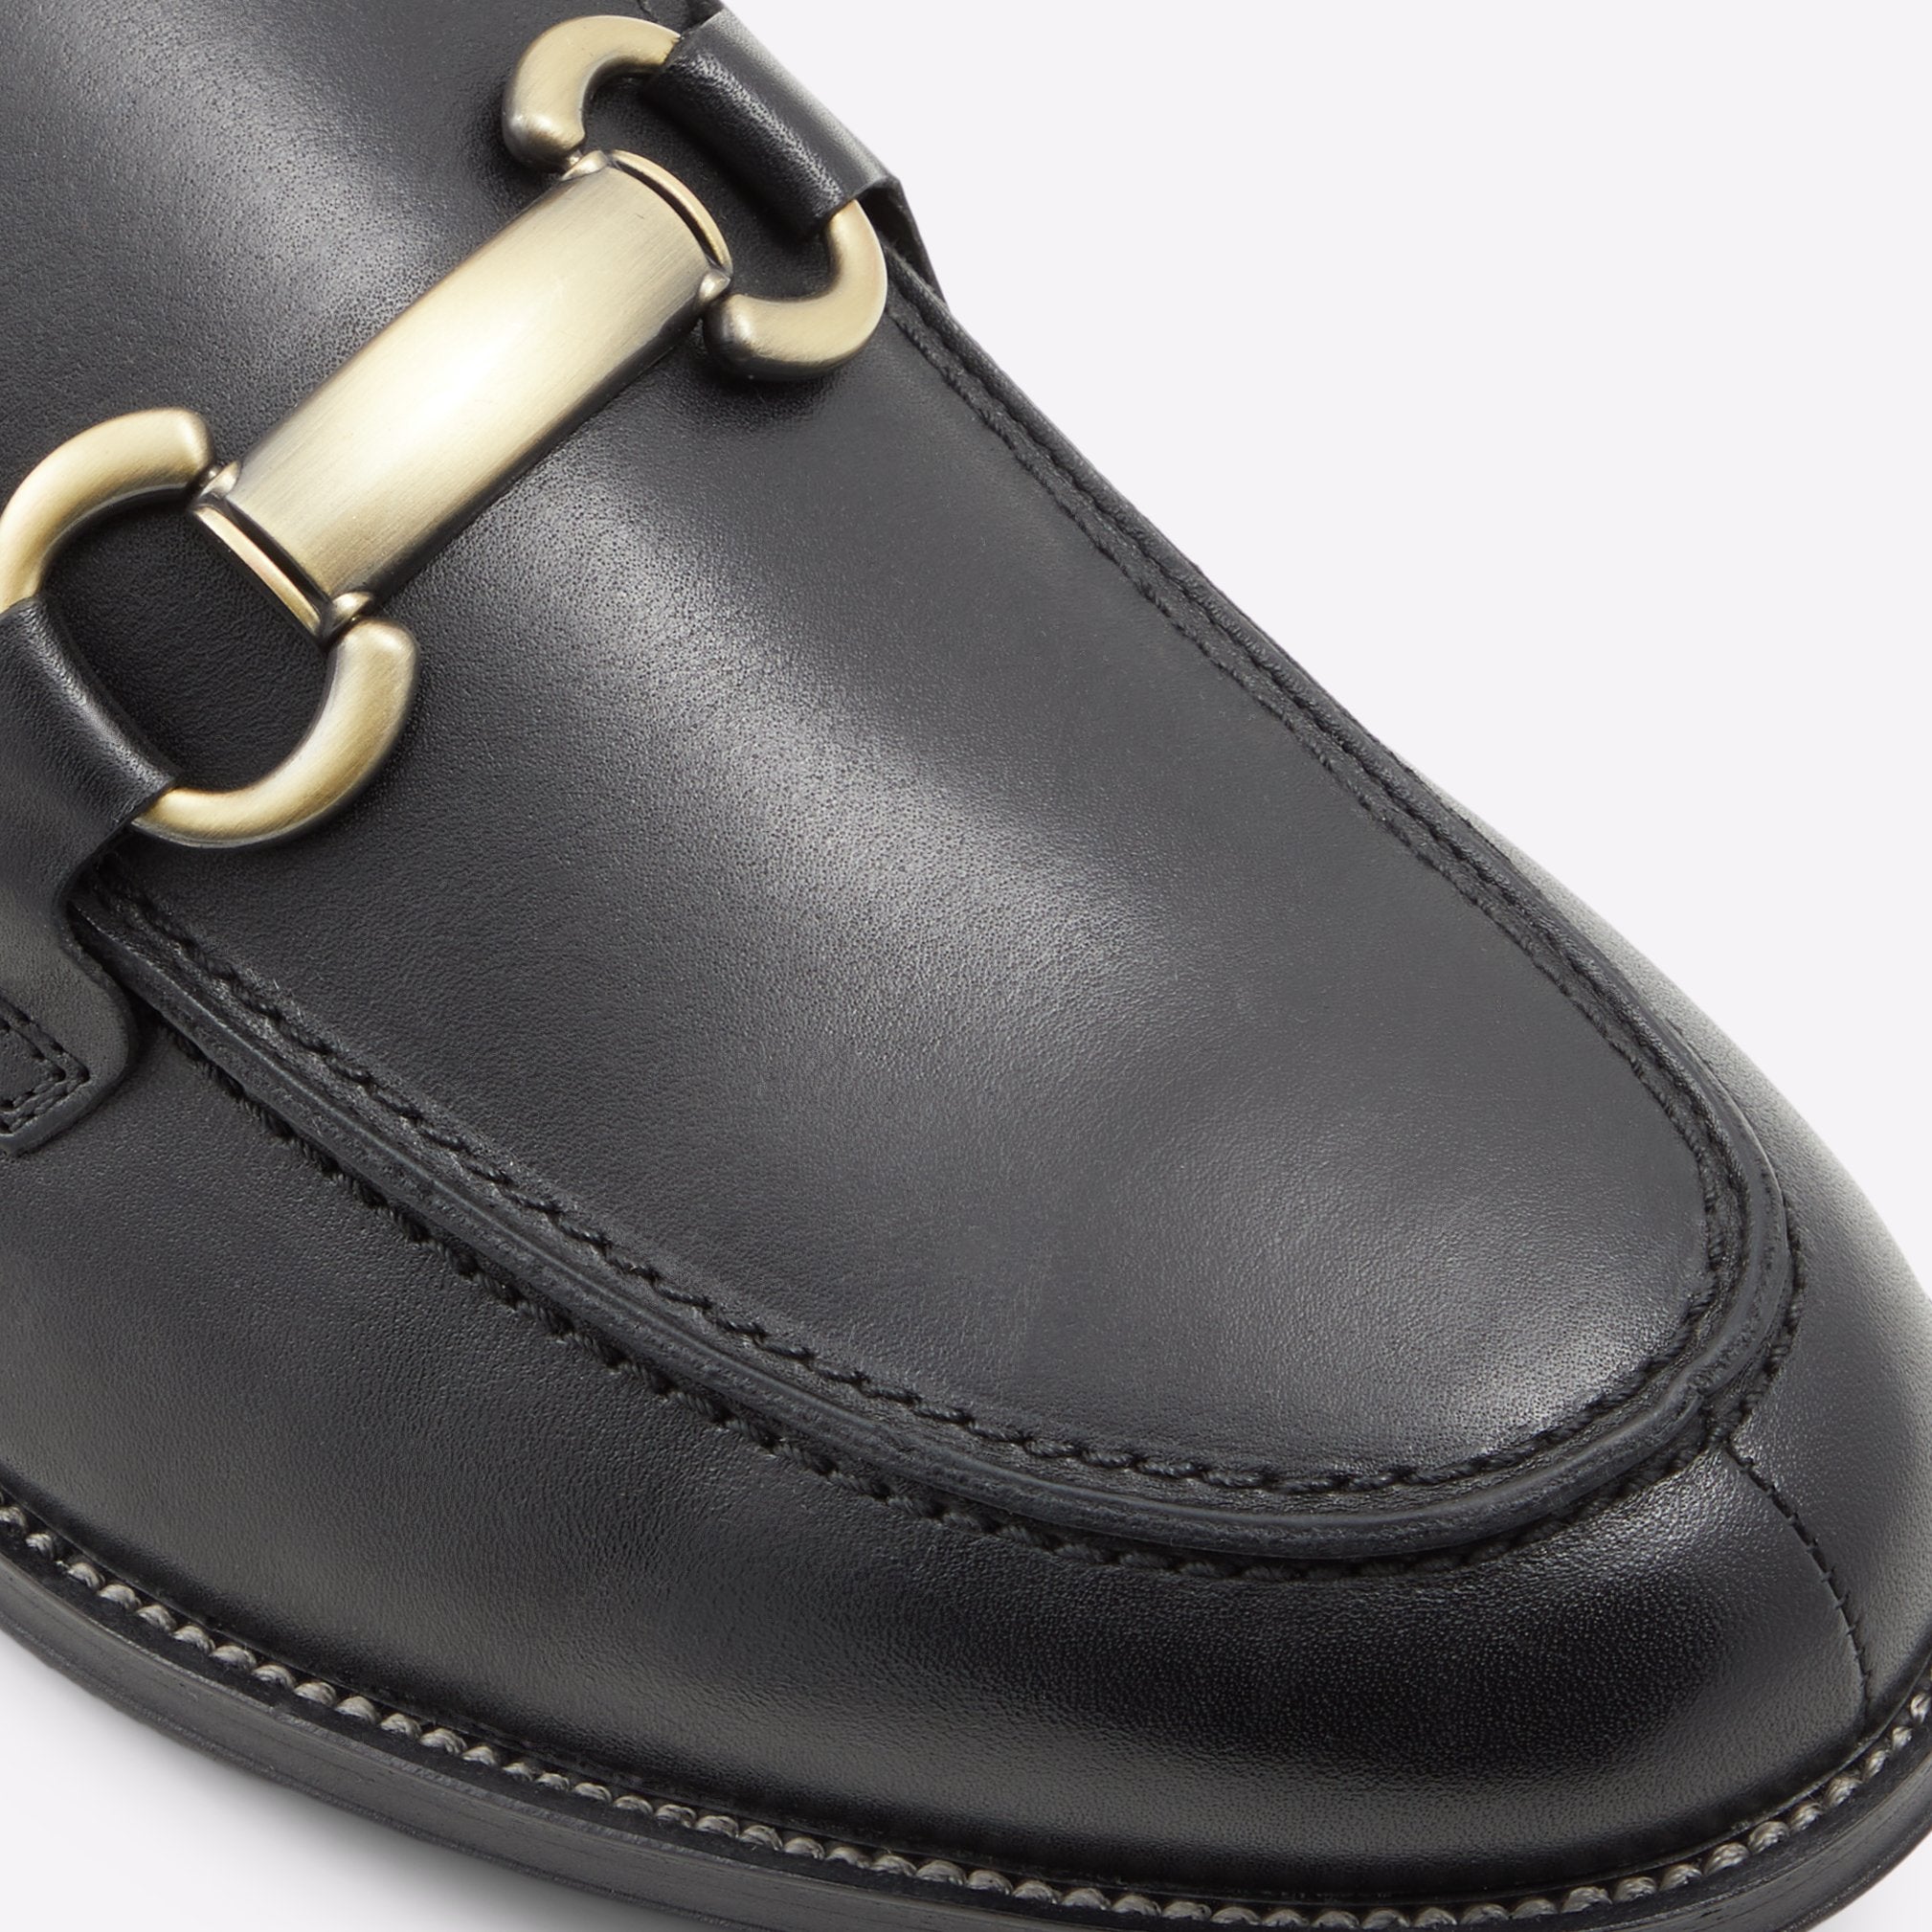 Hartheflex Men Shoes - Black - ALDO KSA